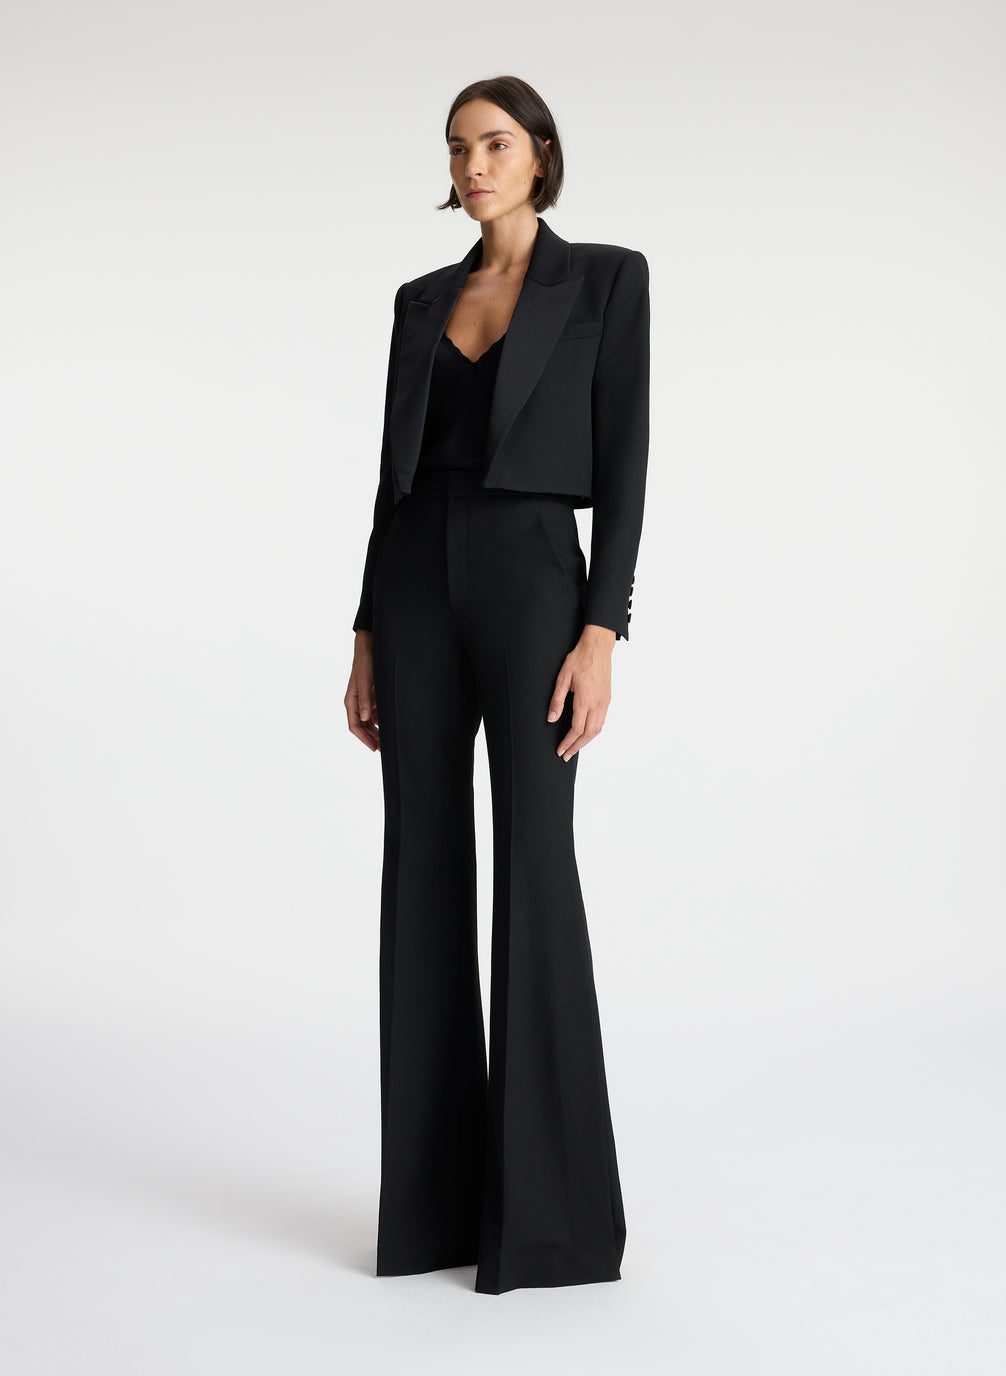 Black Pantsuit, Women's Clothing